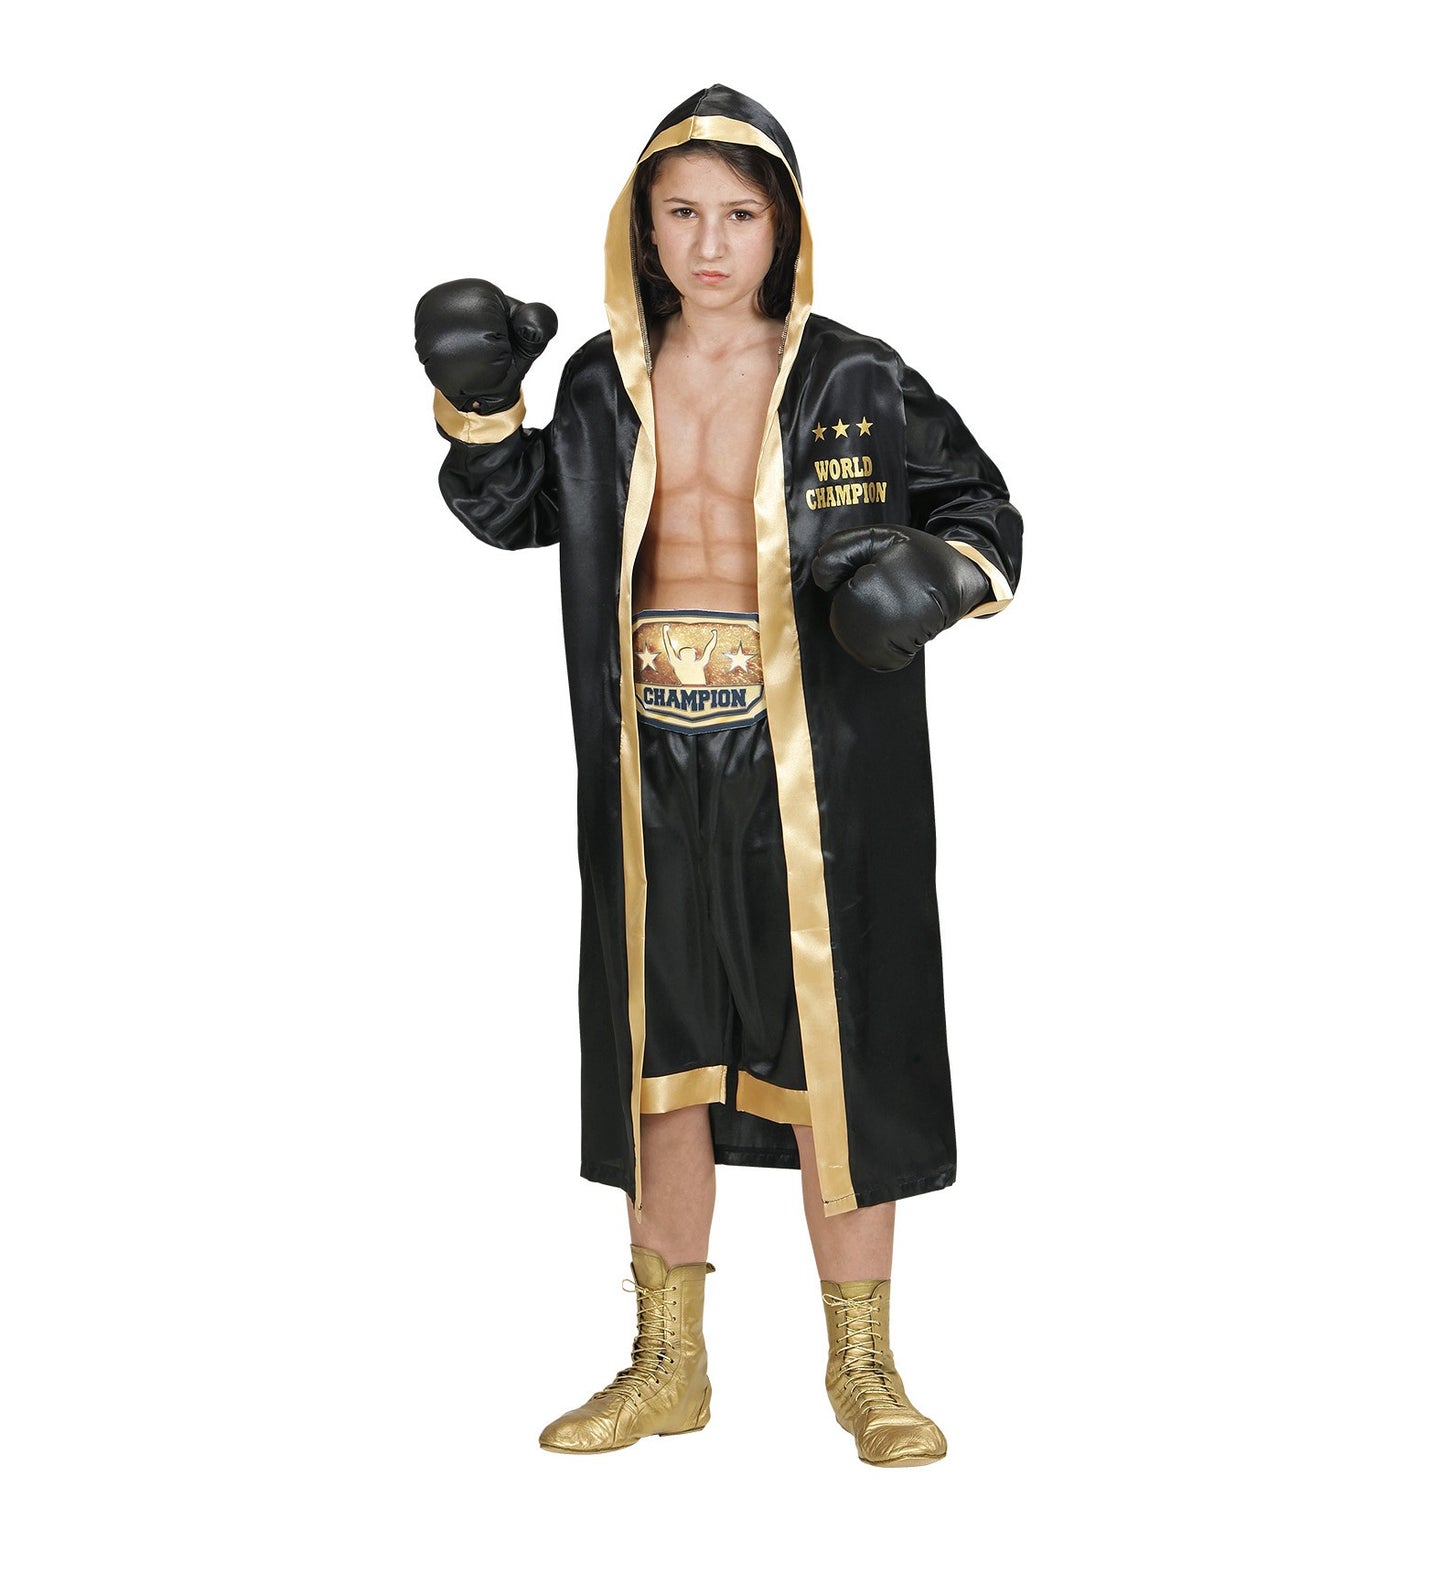 World Boxer Champion costume